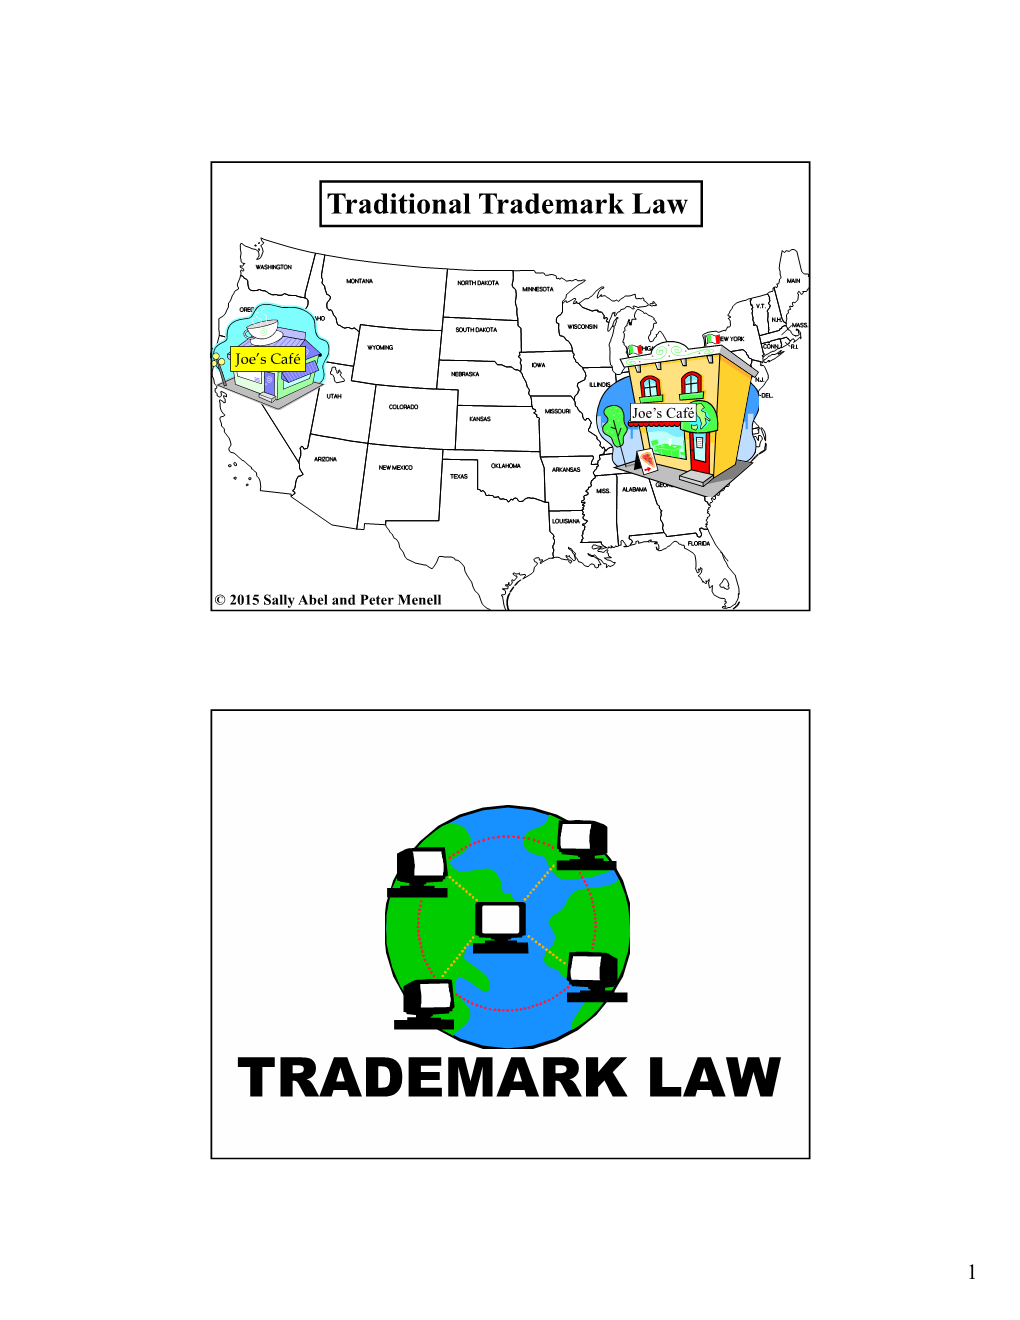 Trademark Law